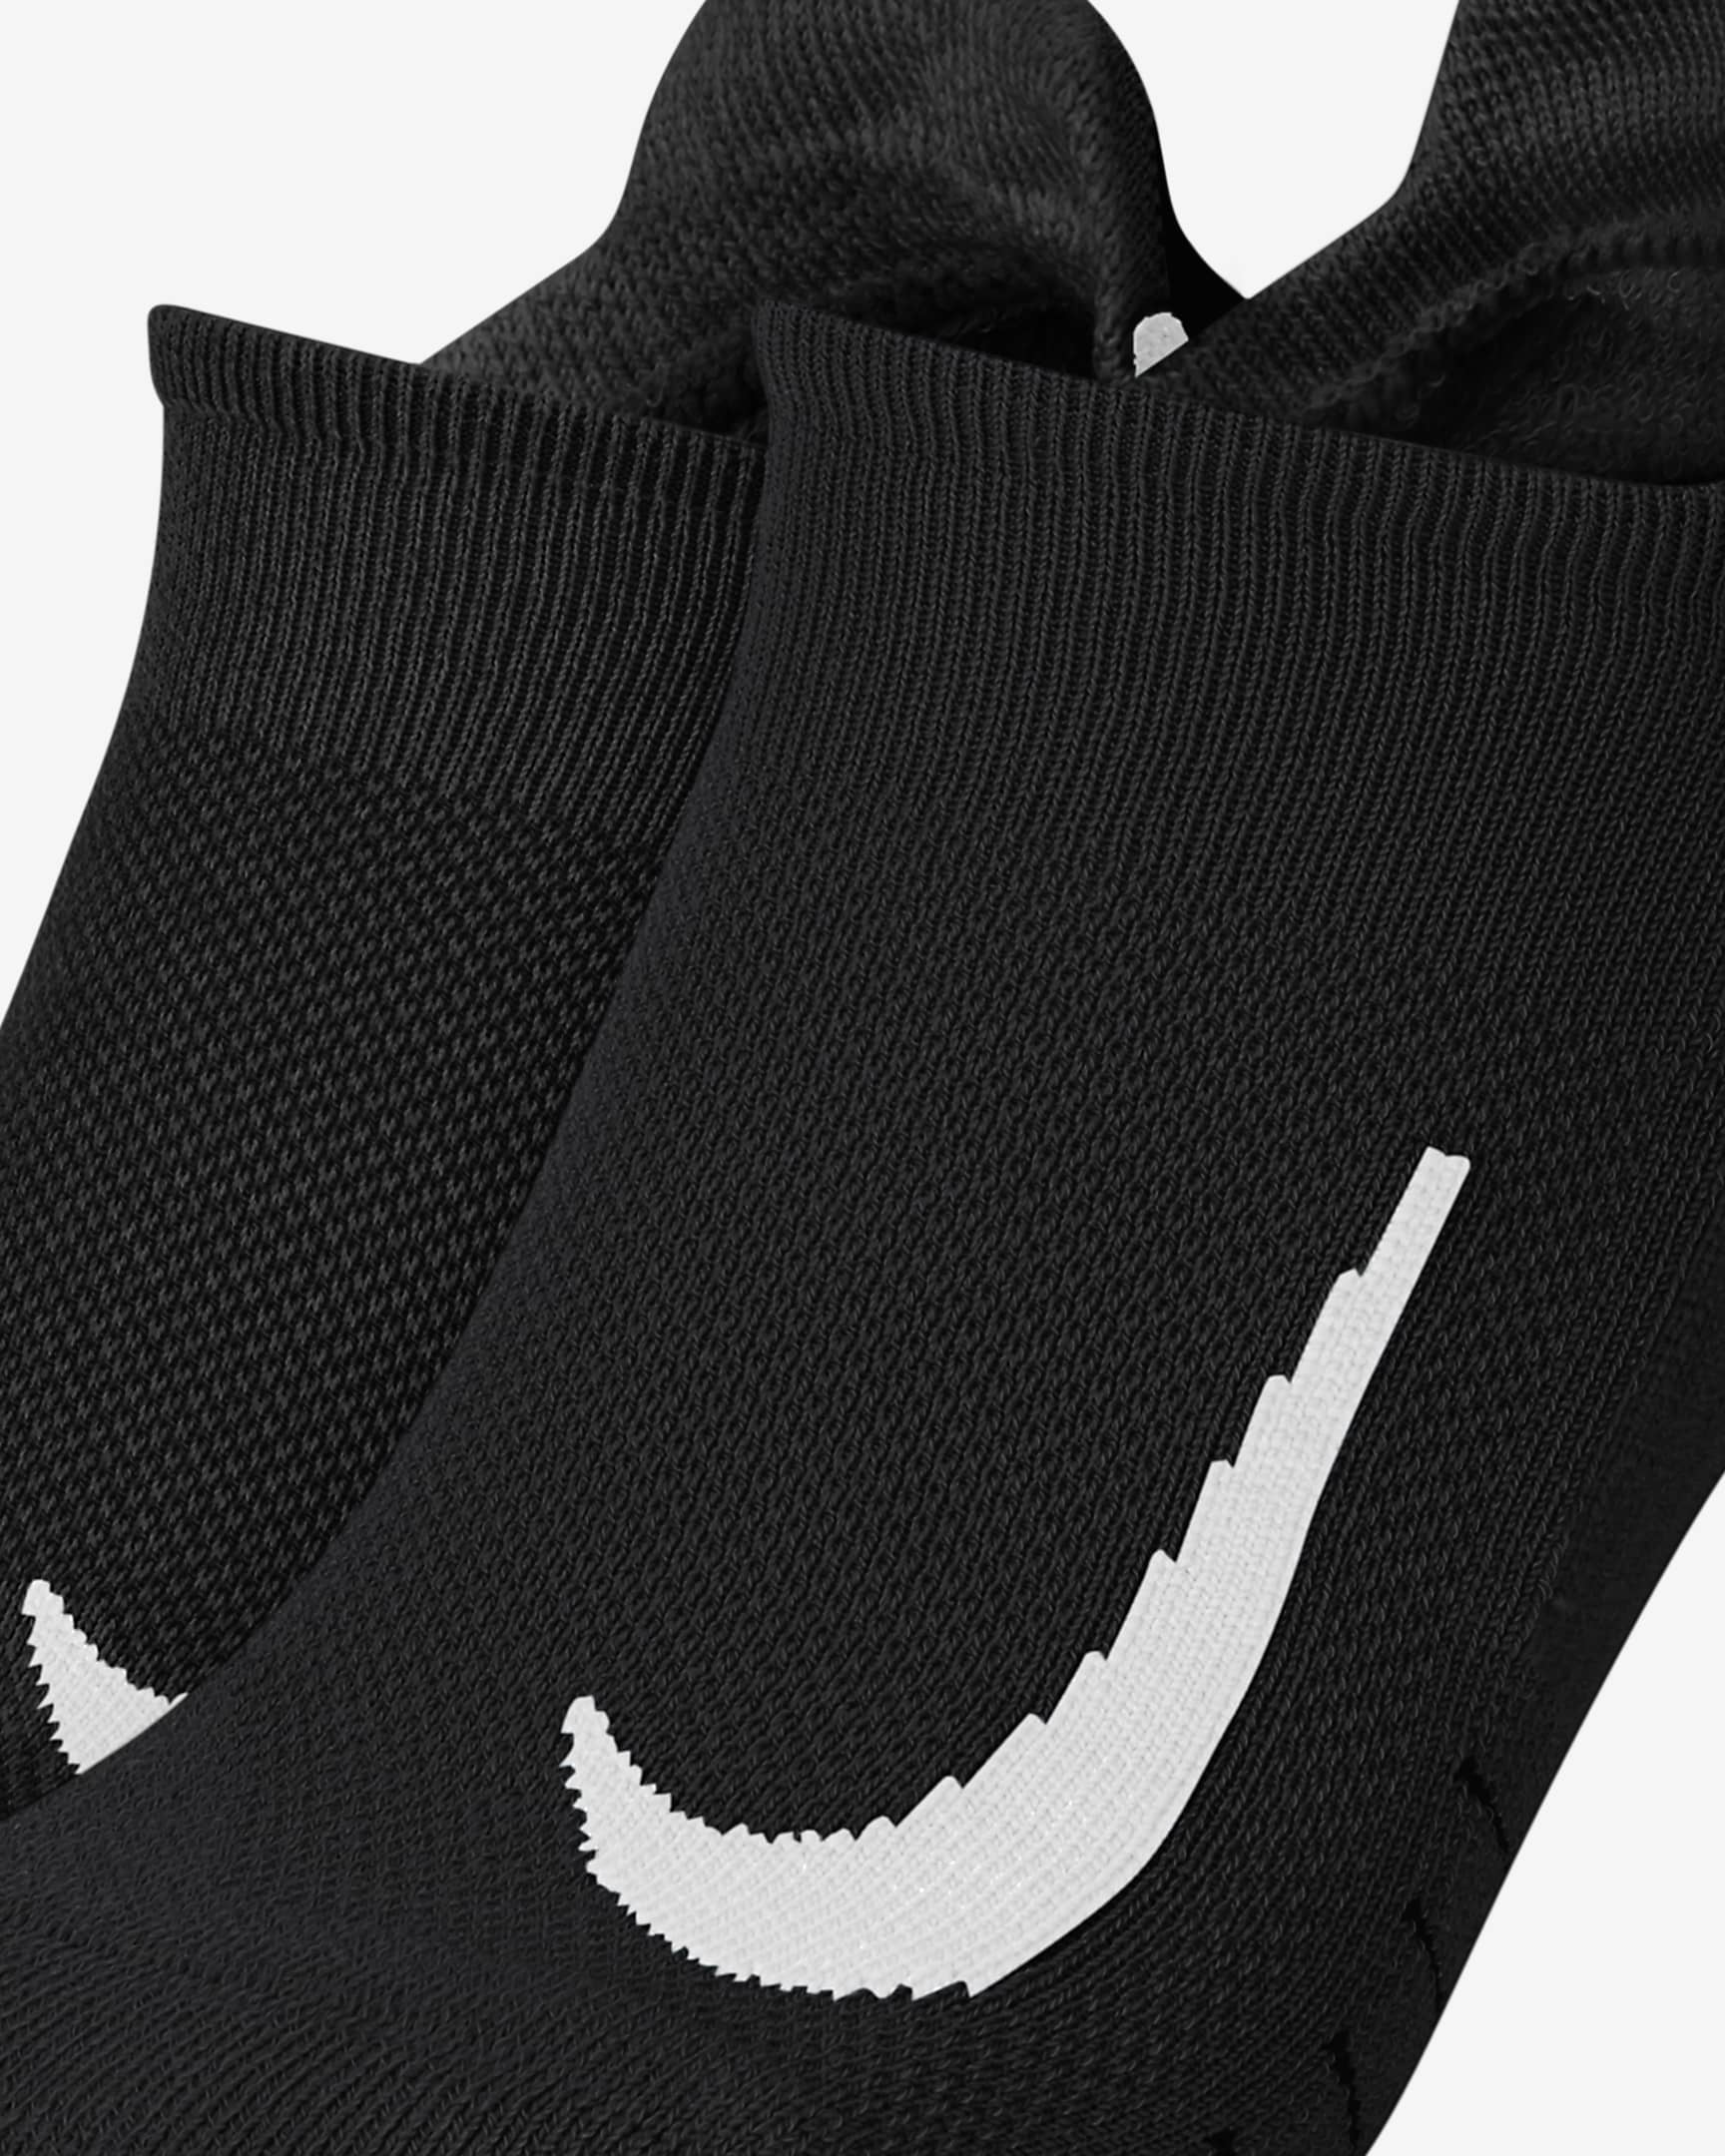 Nike Multiplier Running No-Show Socks (2 Pairs) - Black/White